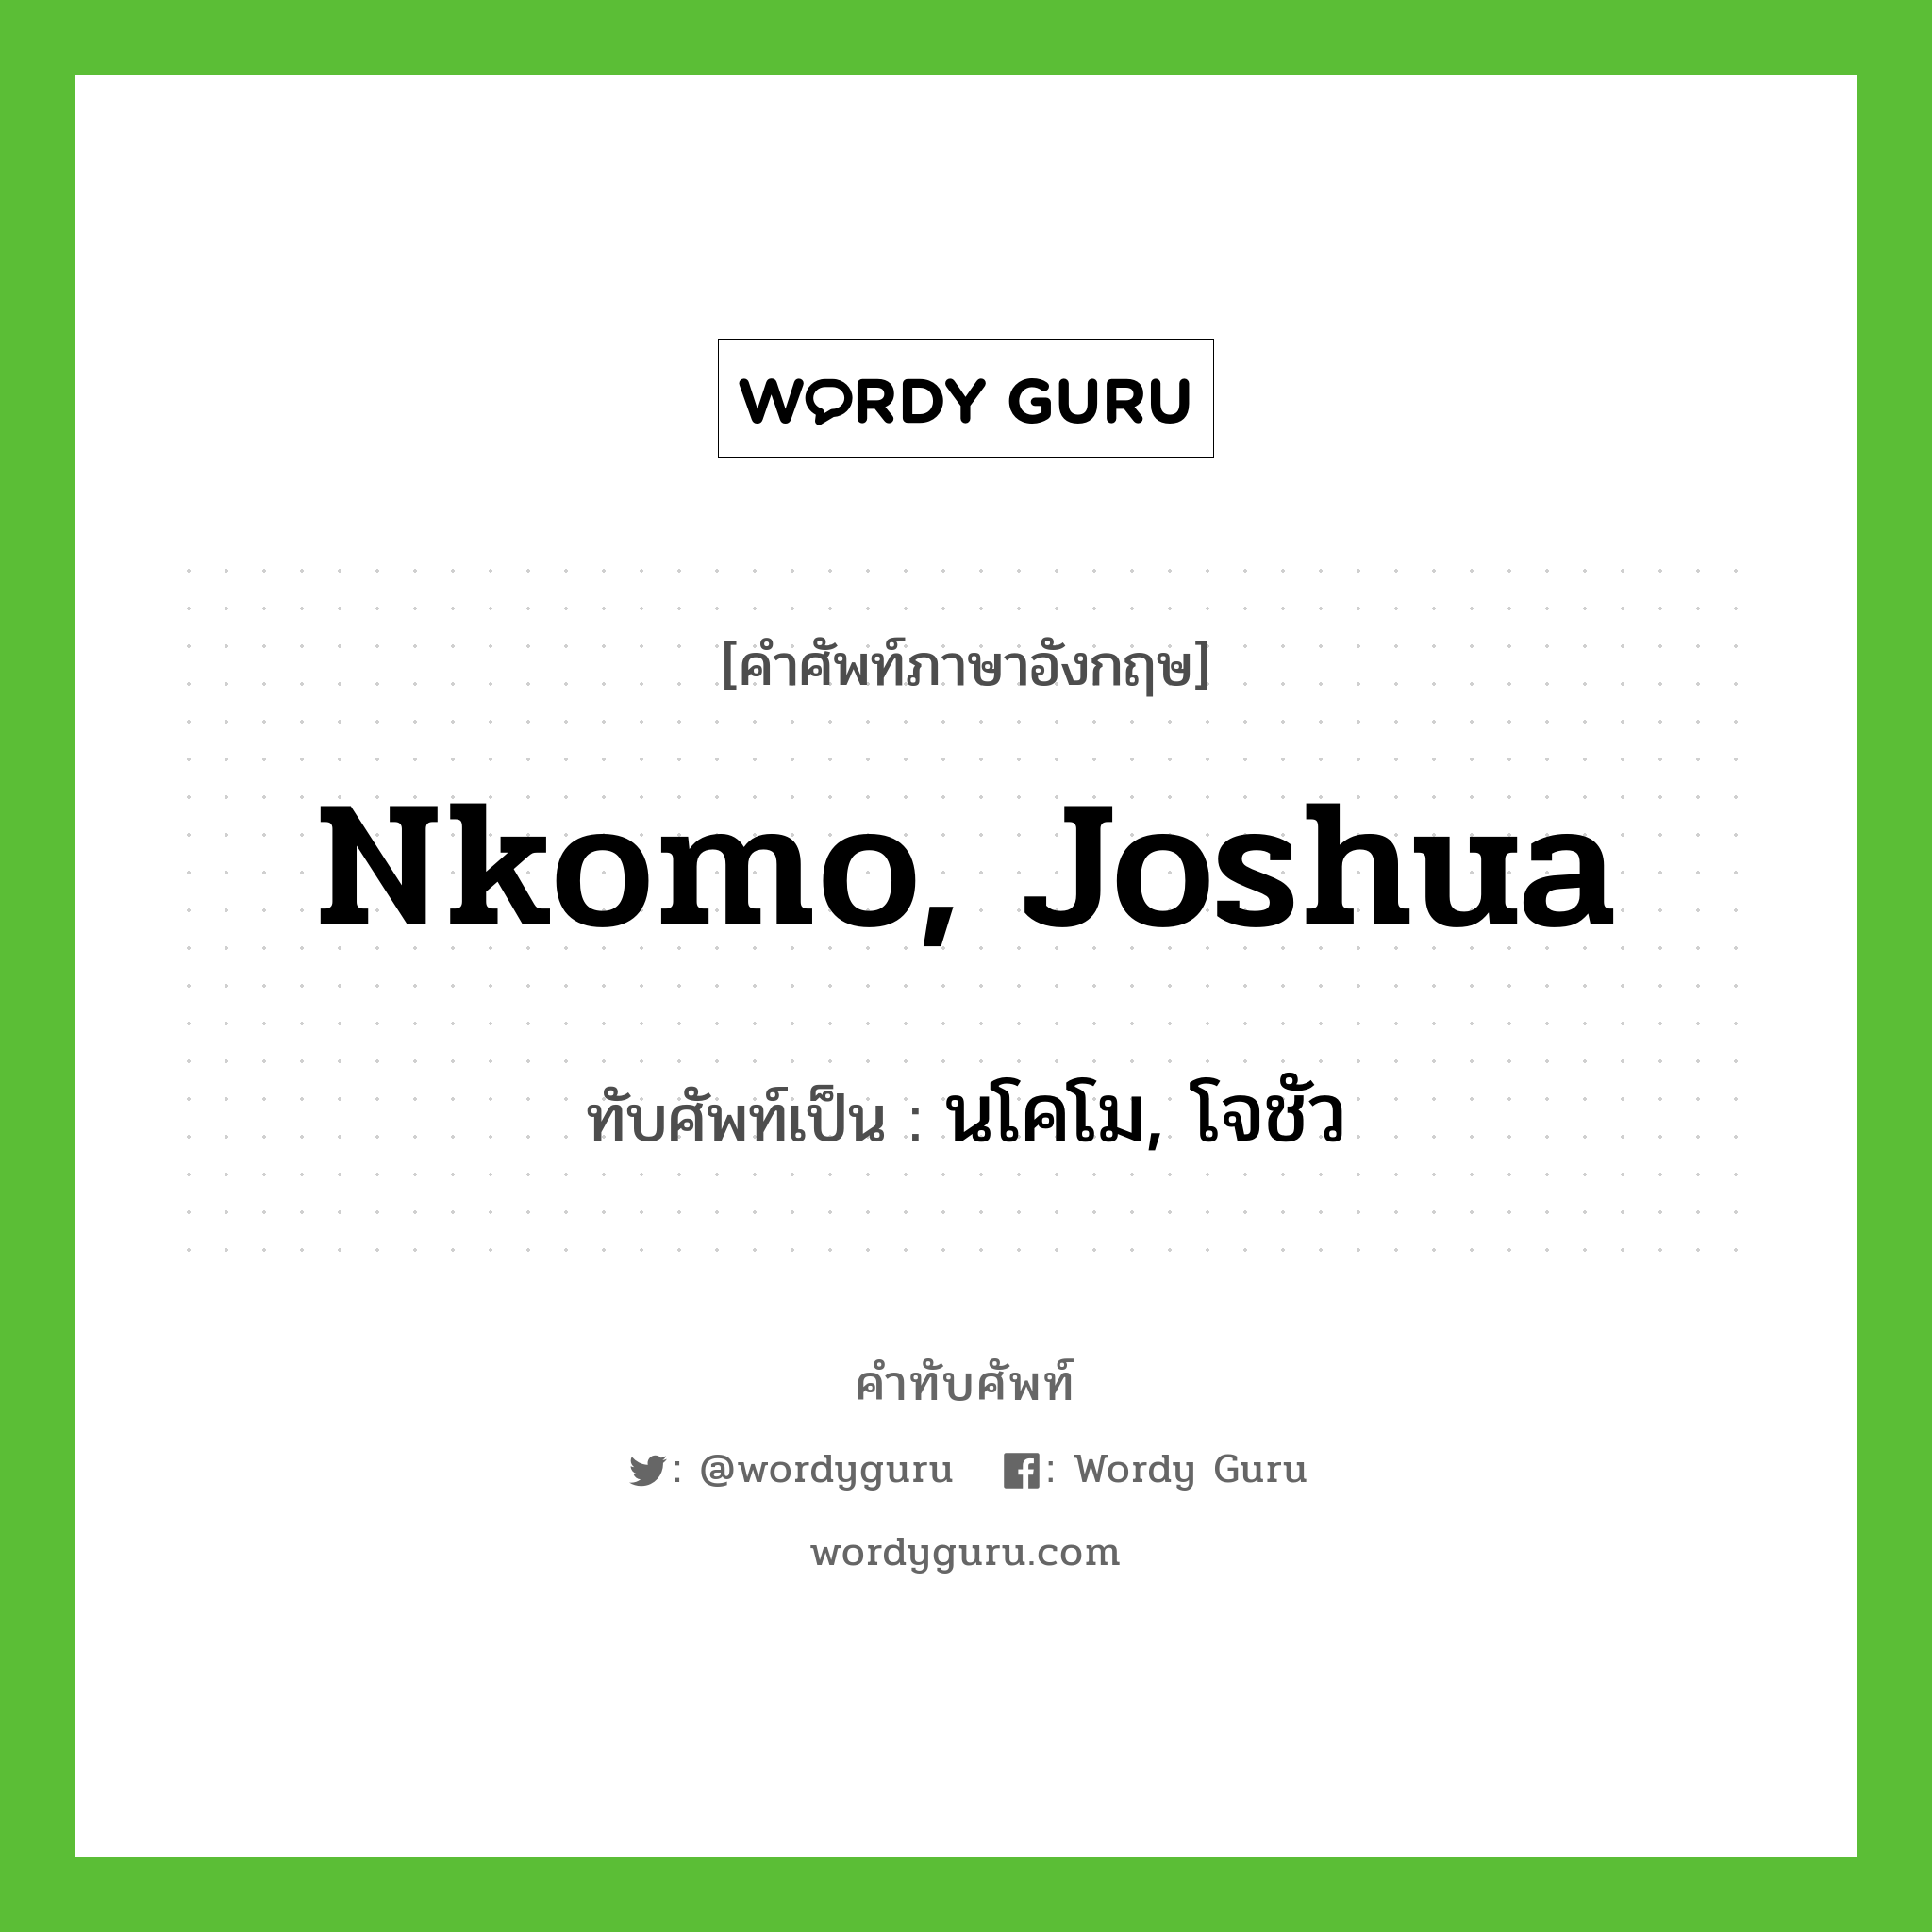 Nkomo, Joshua เขียนเป็นคำไทยว่าอะไร?, คำศัพท์ภาษาอังกฤษ Nkomo, Joshua ทับศัพท์เป็น นโคโม, โจชัว